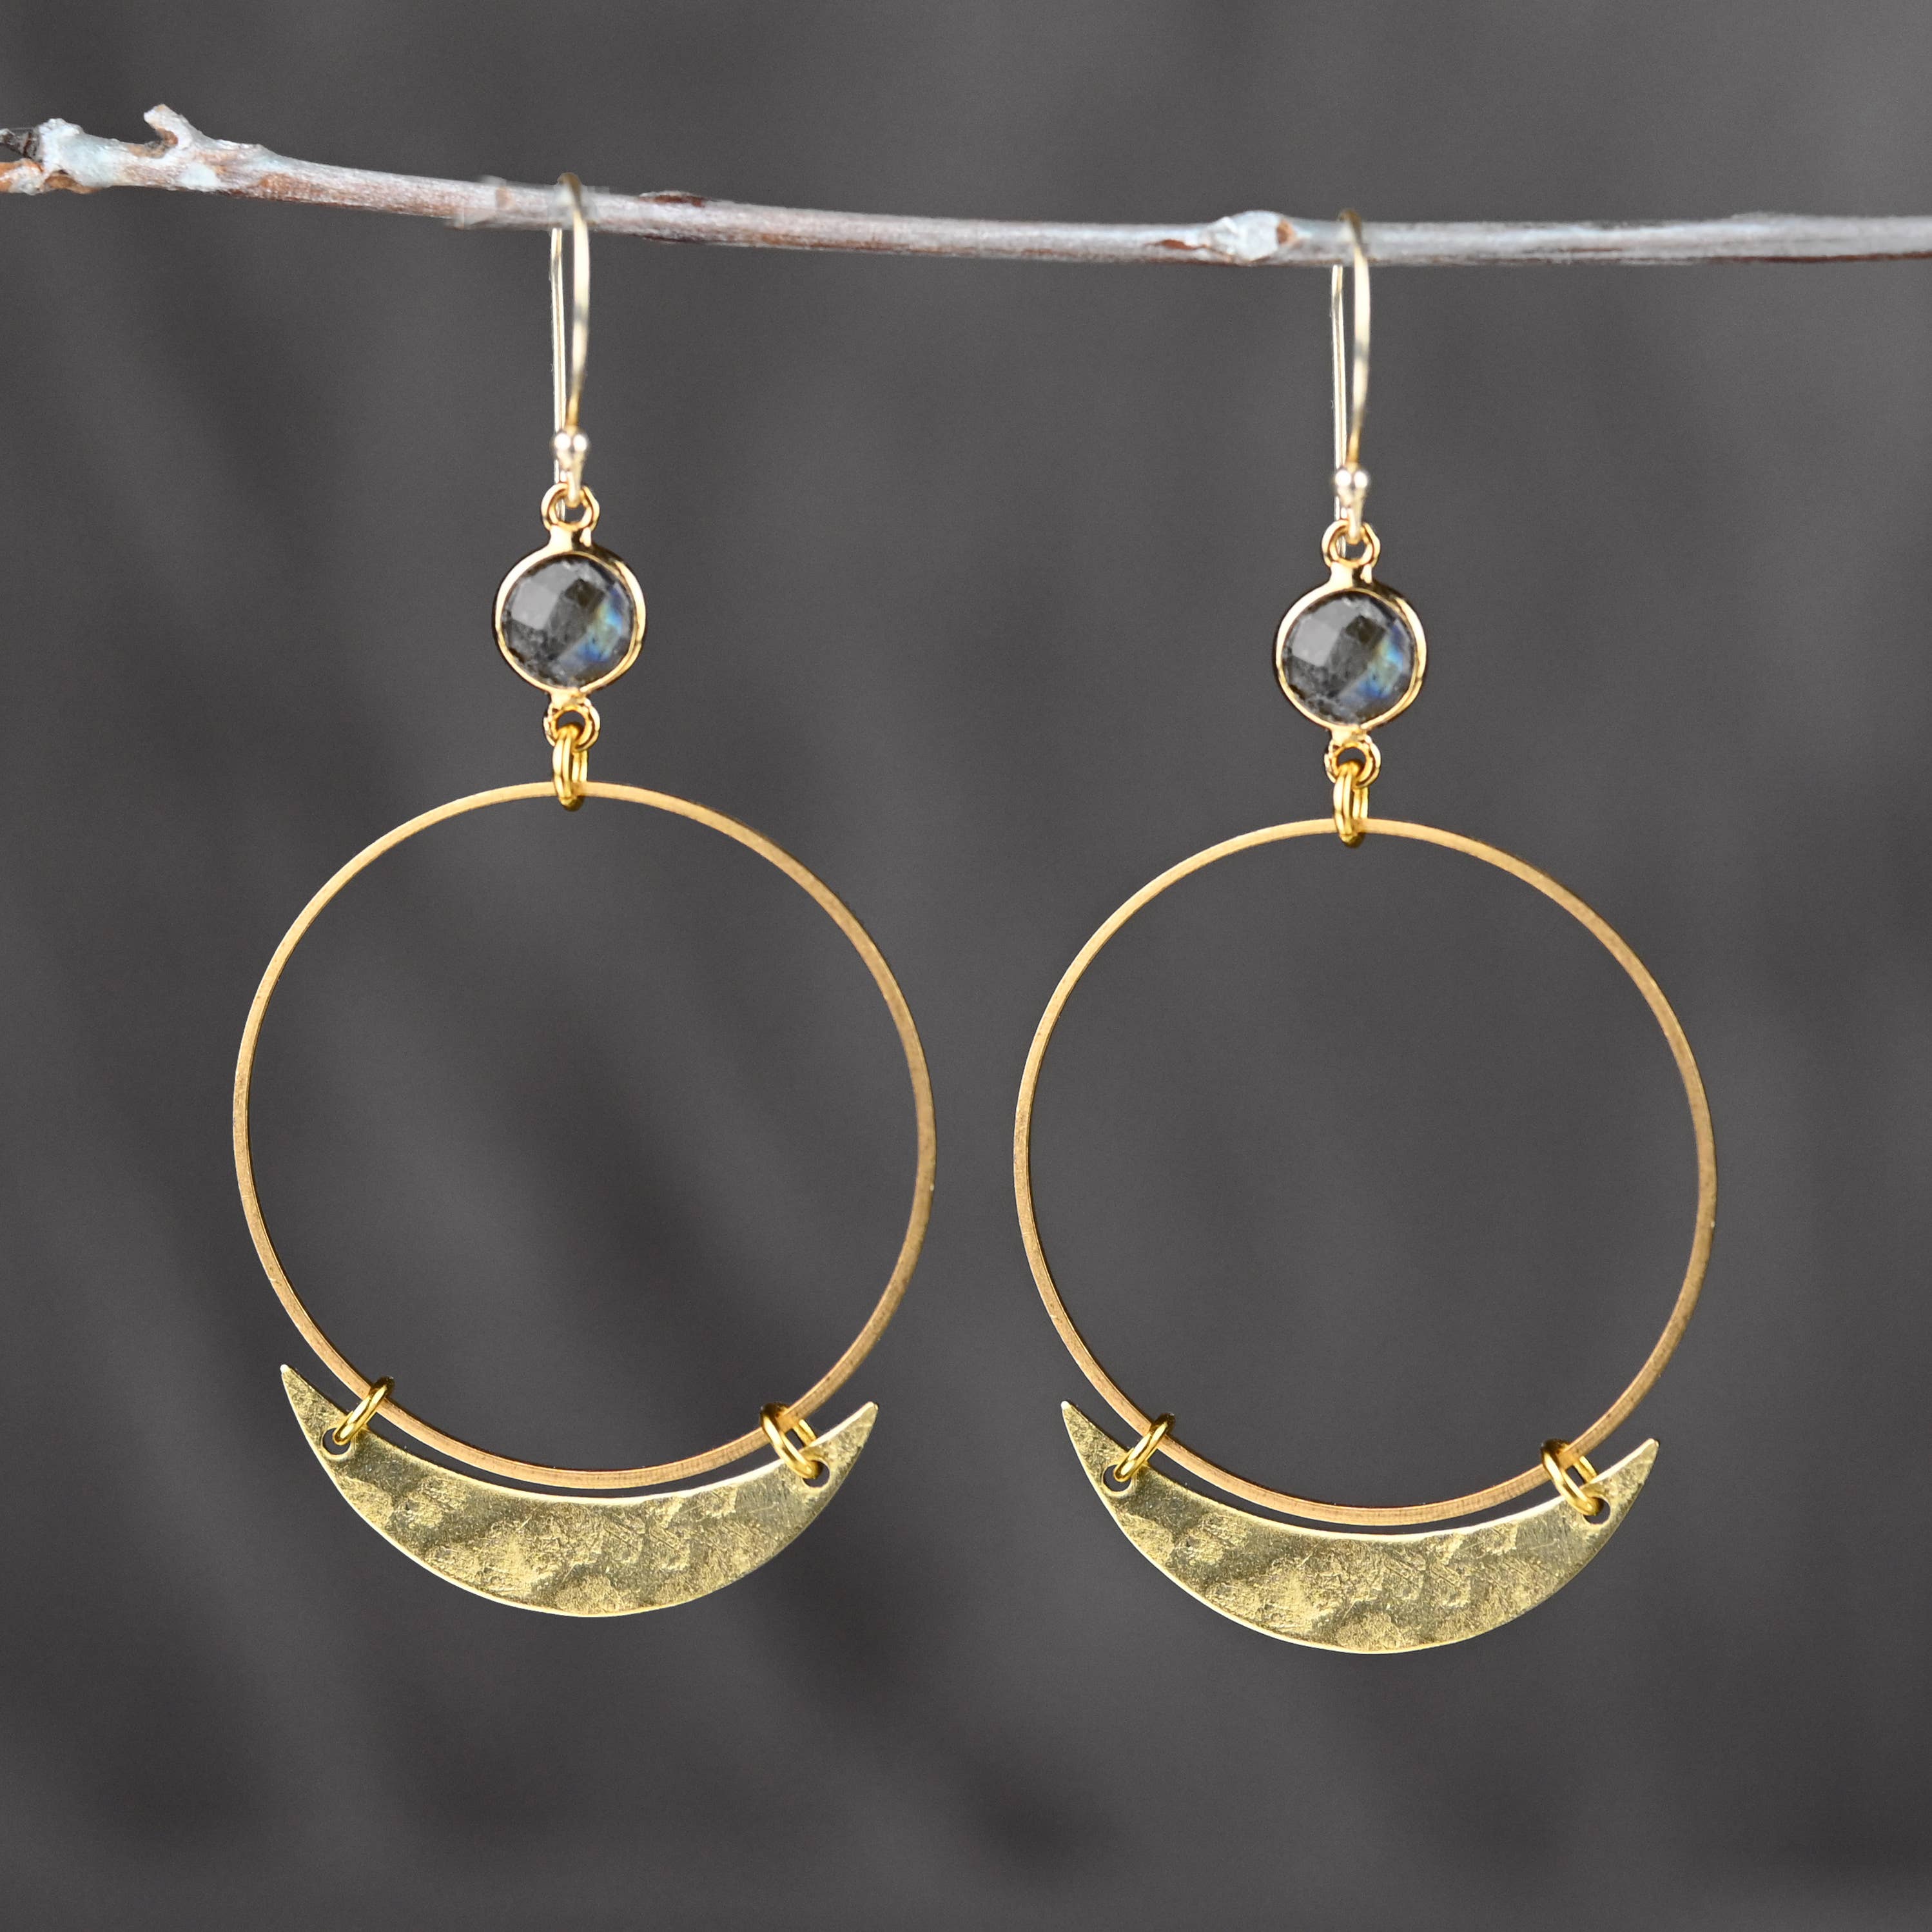 40mm Brass Hoop with Hammered Crescent & Labradorite Semi Precious Gemstone Earrings